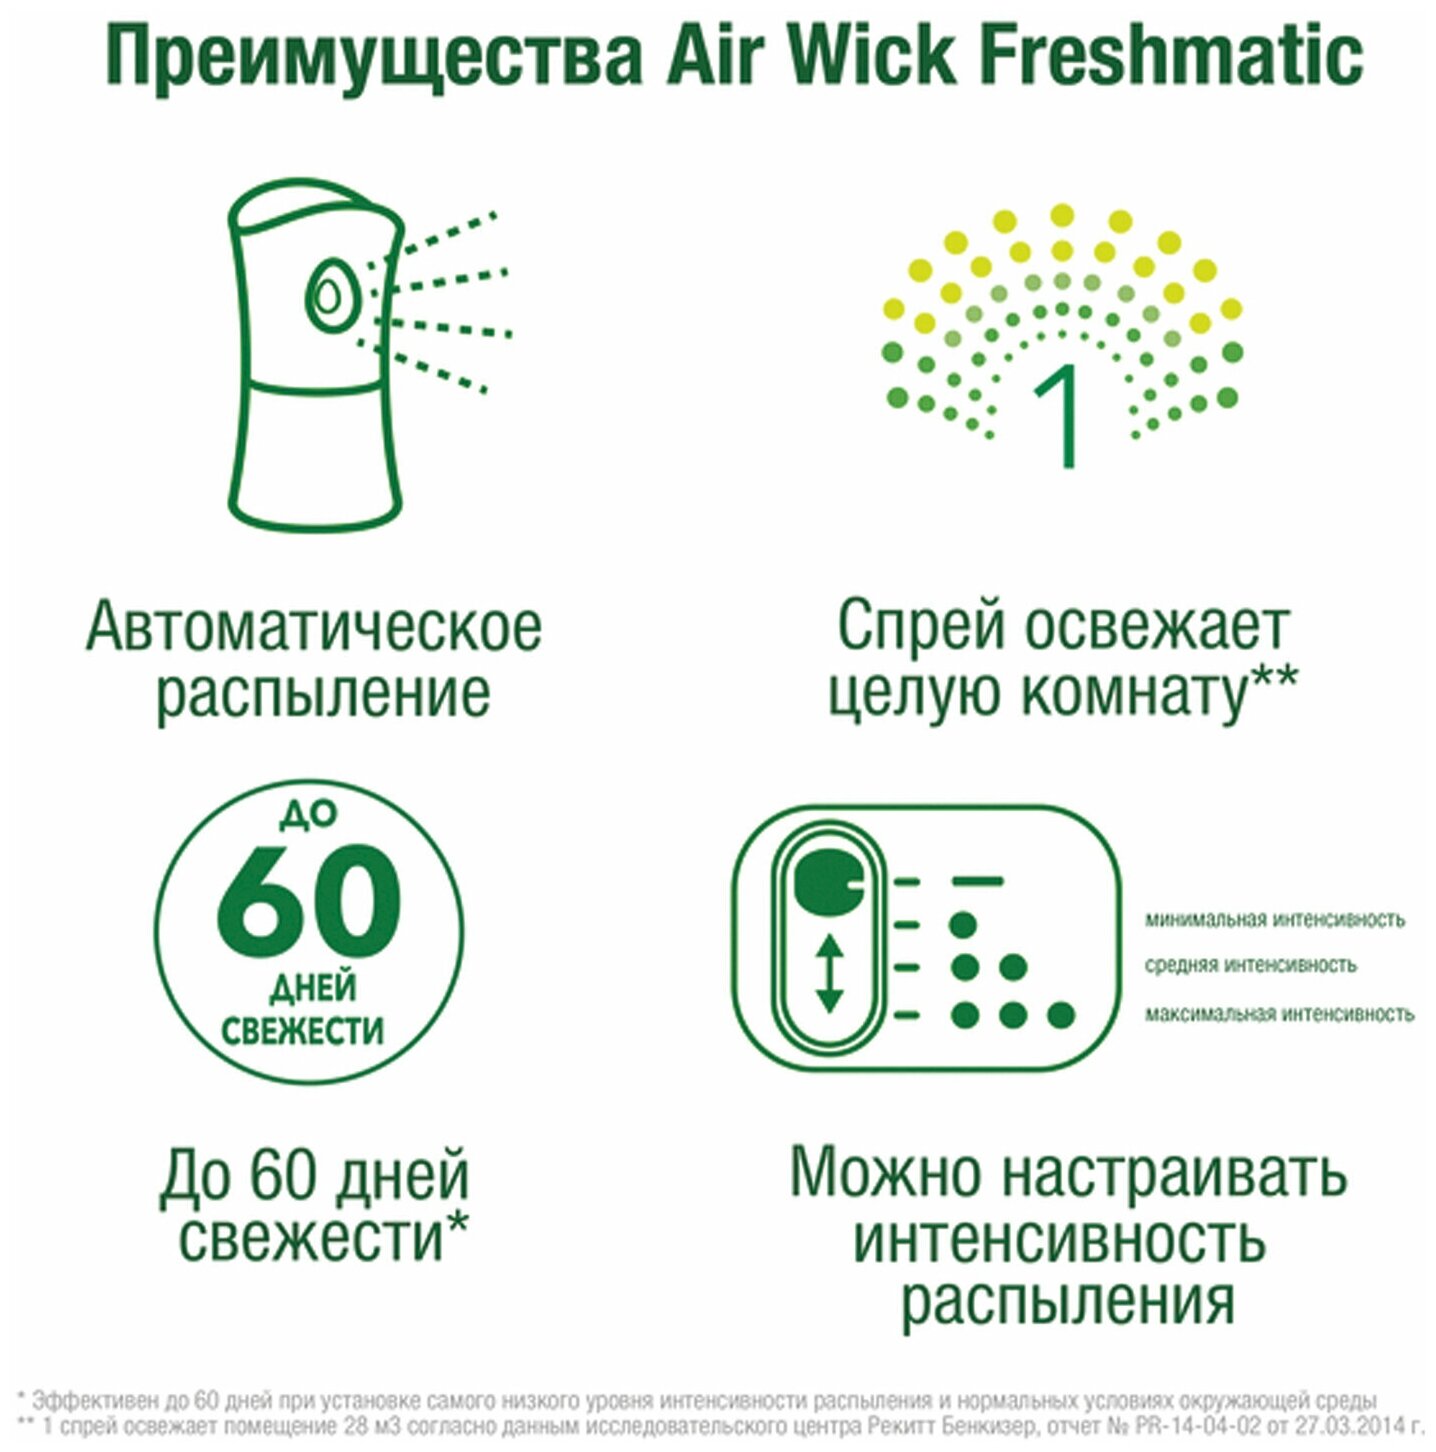 Сменный баллон для Air Wick Freshmatic Нежные цветым 250мл - фото №5